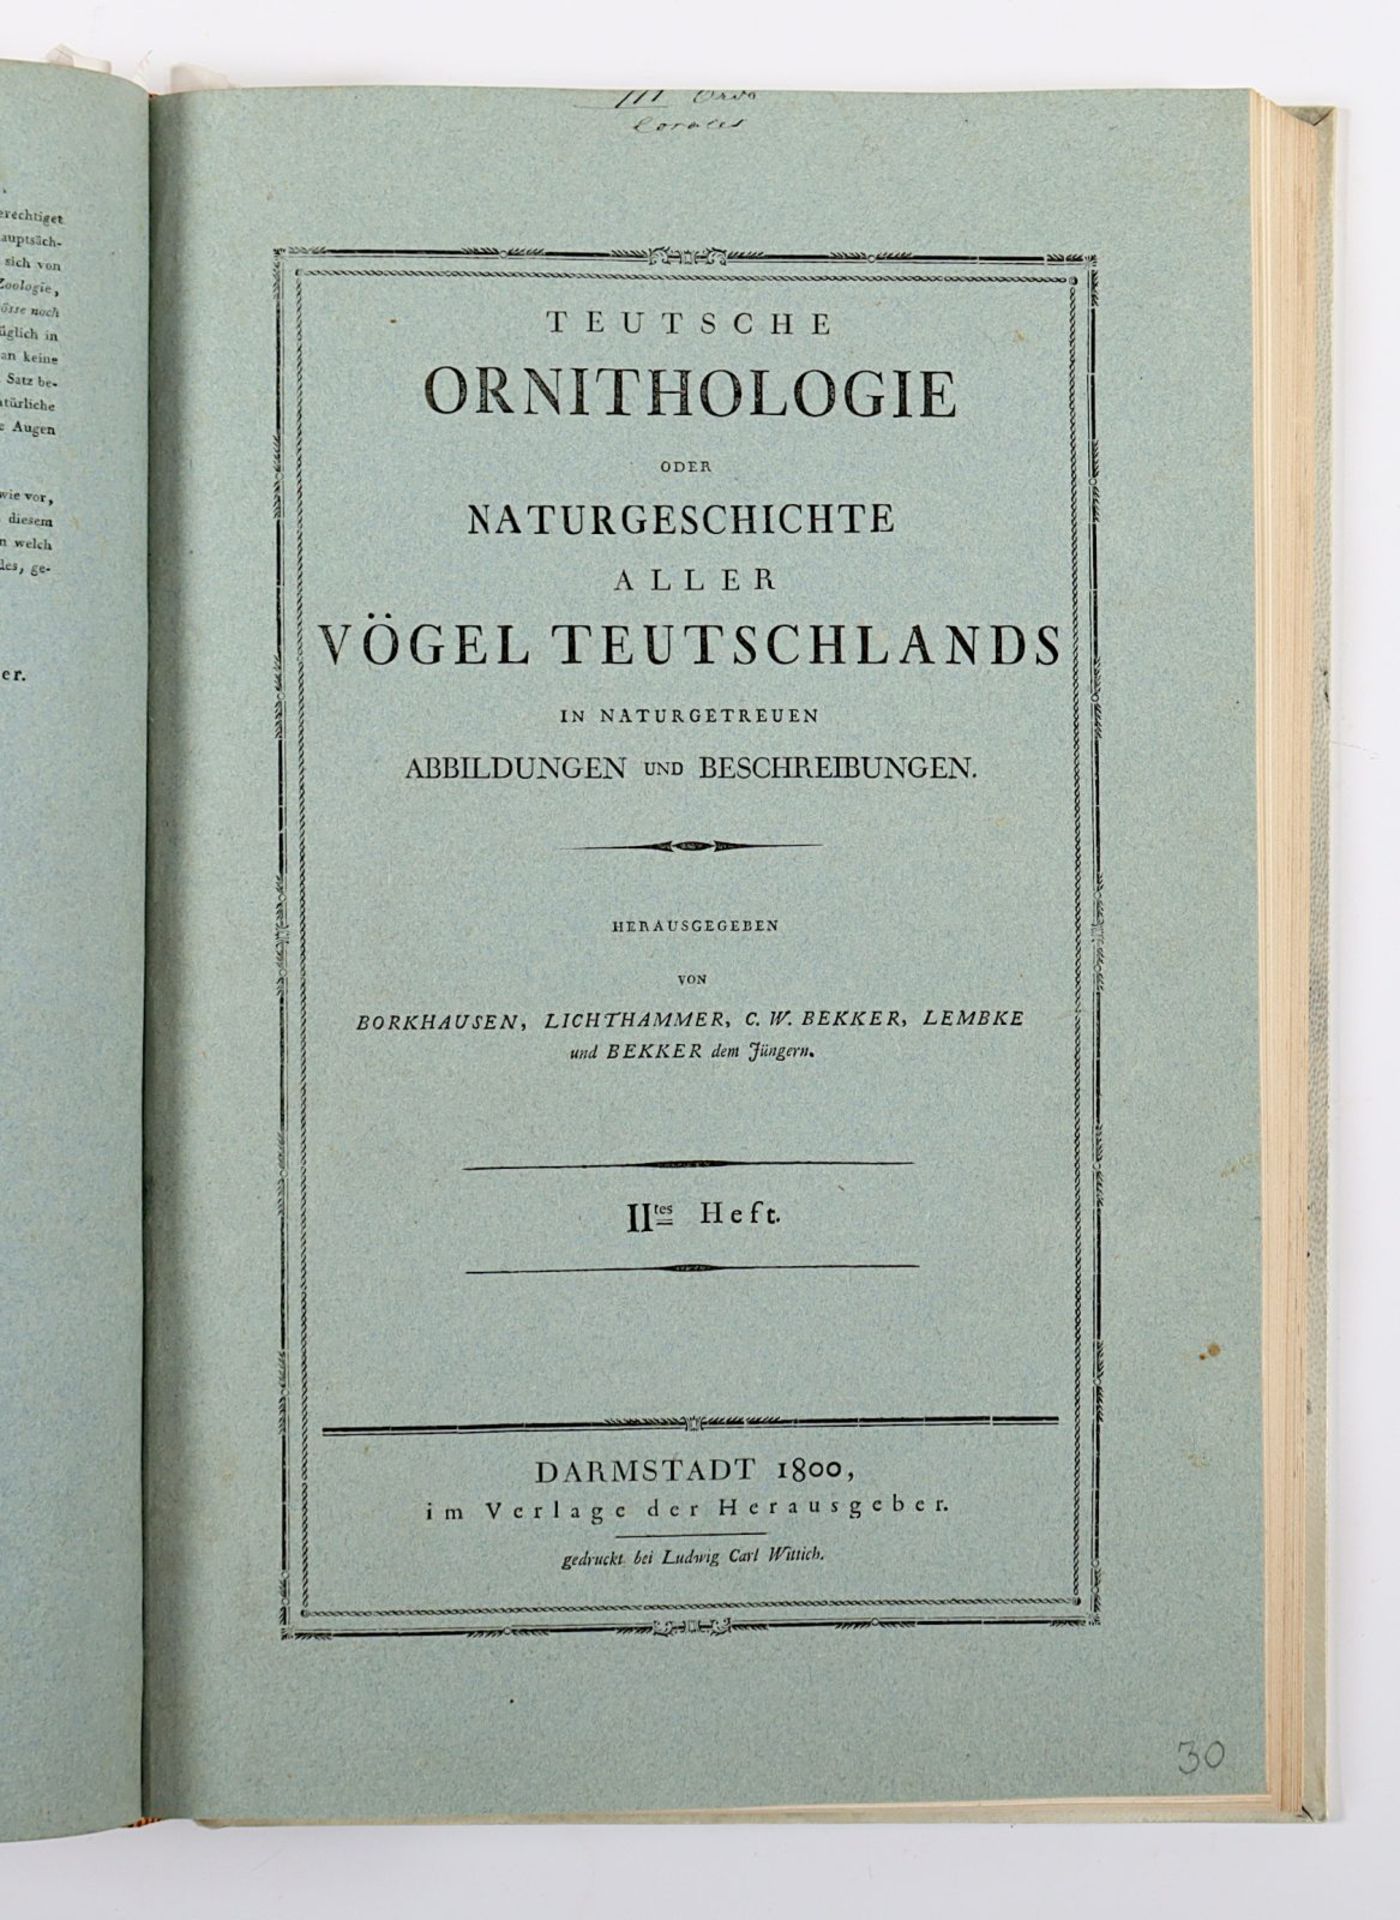 Teutsche Ornithologie, oder Naturgeschichte aller Vögel Teutschlands - Image 7 of 13